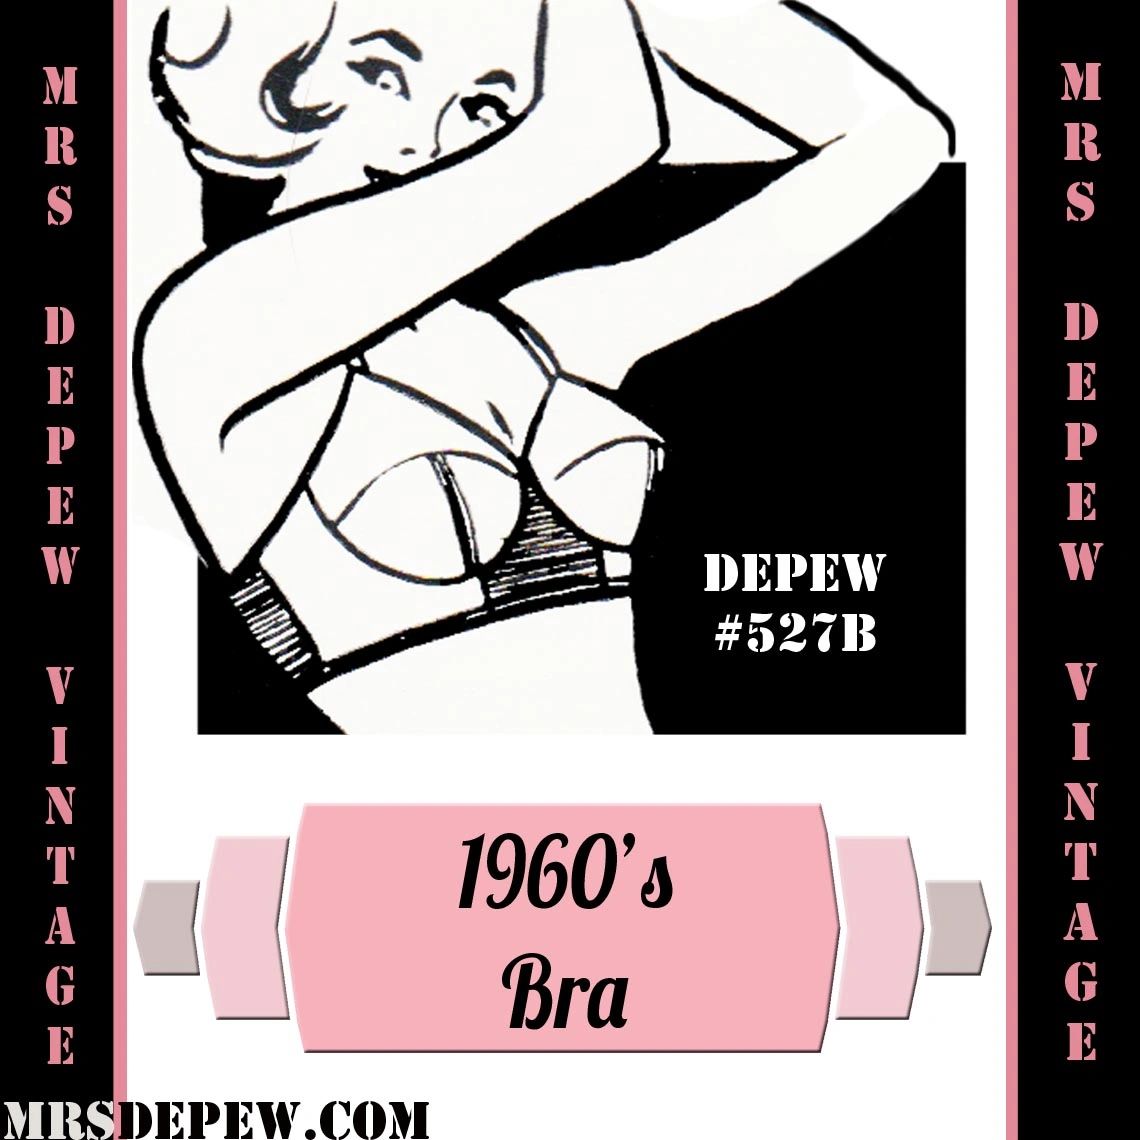 Sew Knit N Stretch 218 1960s Misses Ladies Bullet Bra Pattern Womens Vintage  Sewing Pattern Size 34 A B C Cup UNCUT 